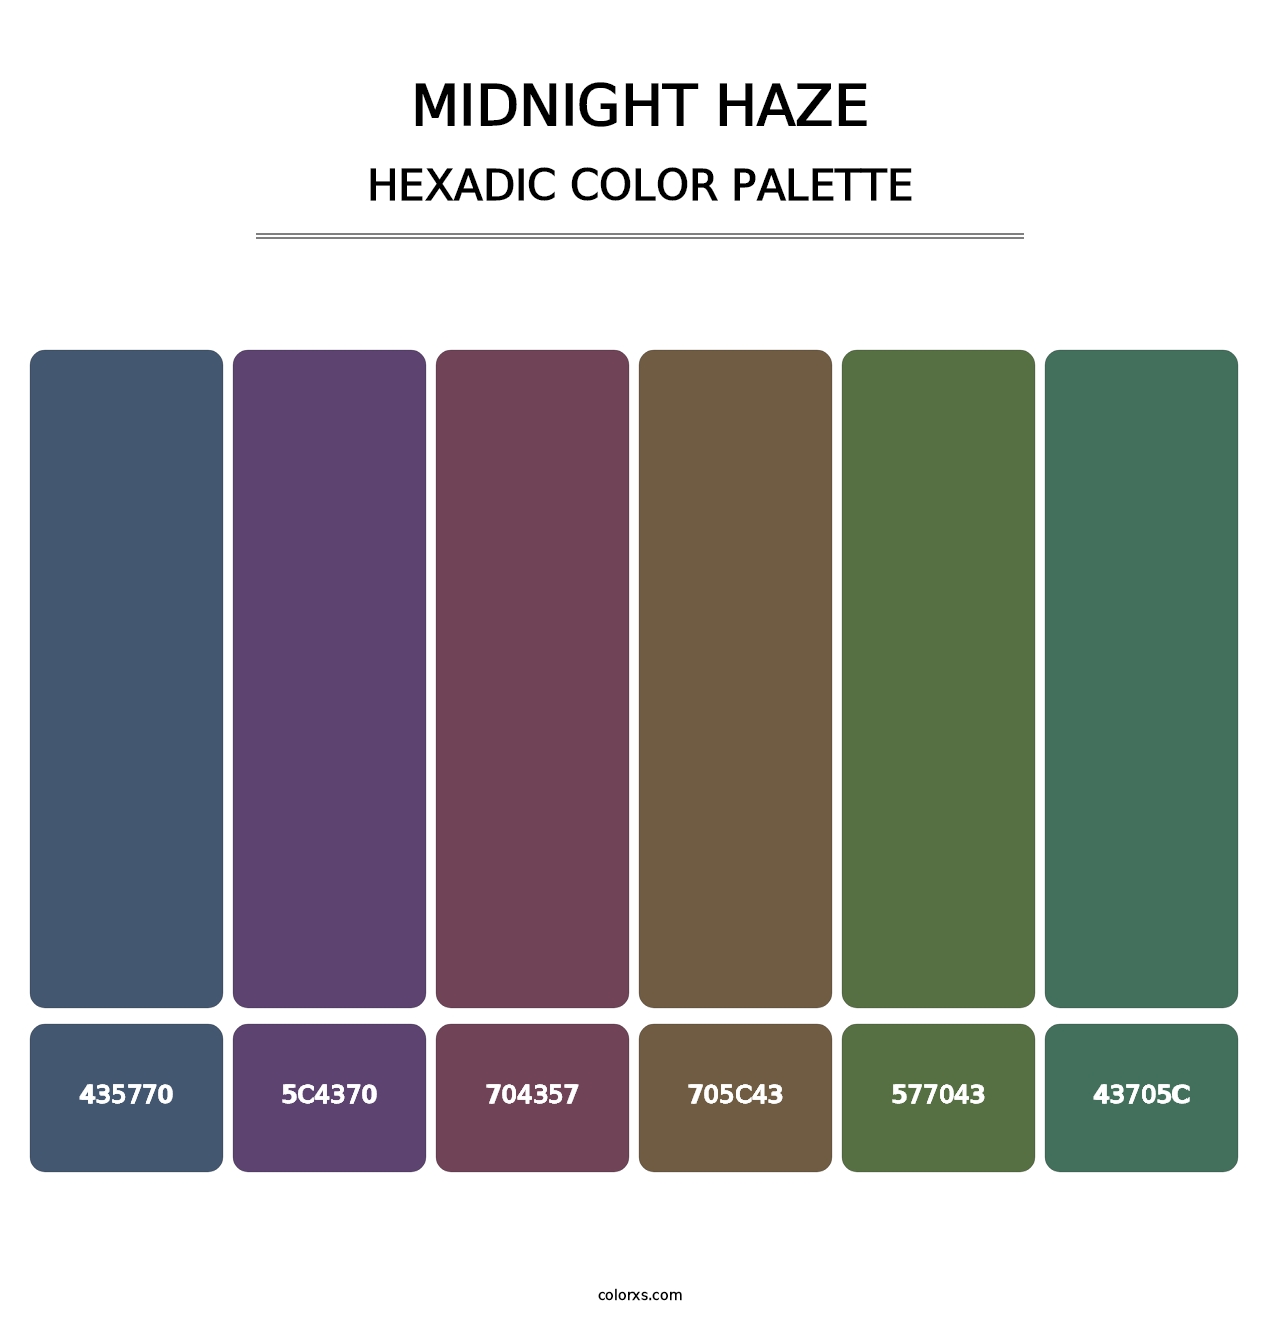 Midnight Haze - Hexadic Color Palette